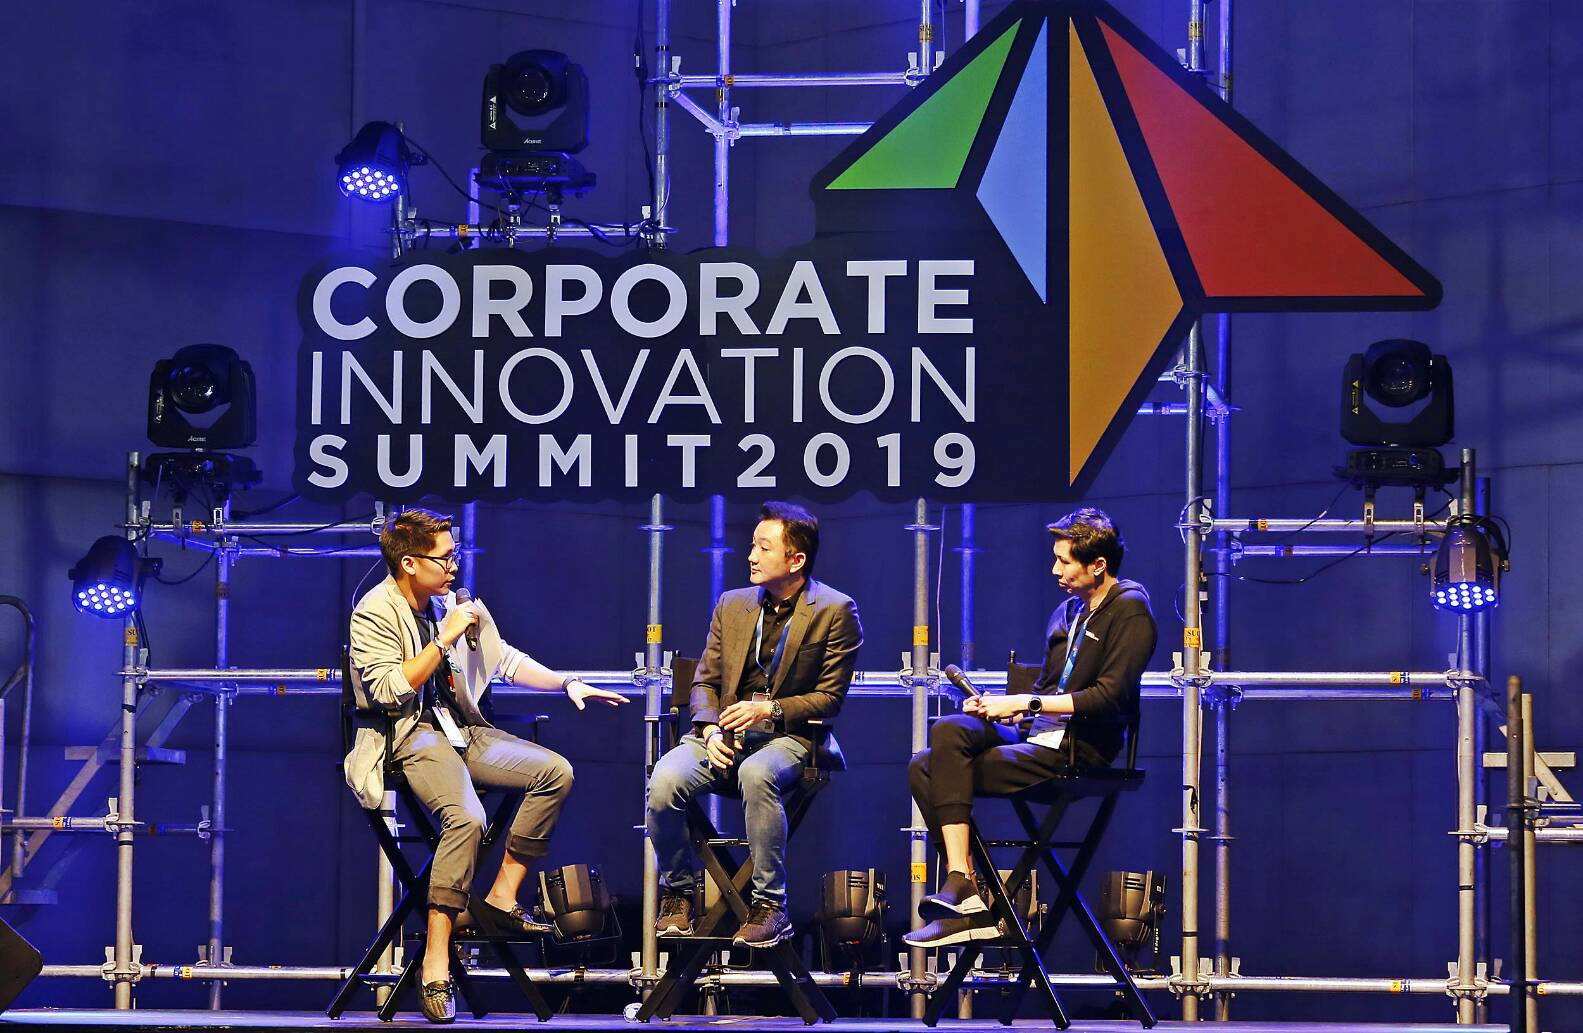 Corporate Innovation Summit 2019